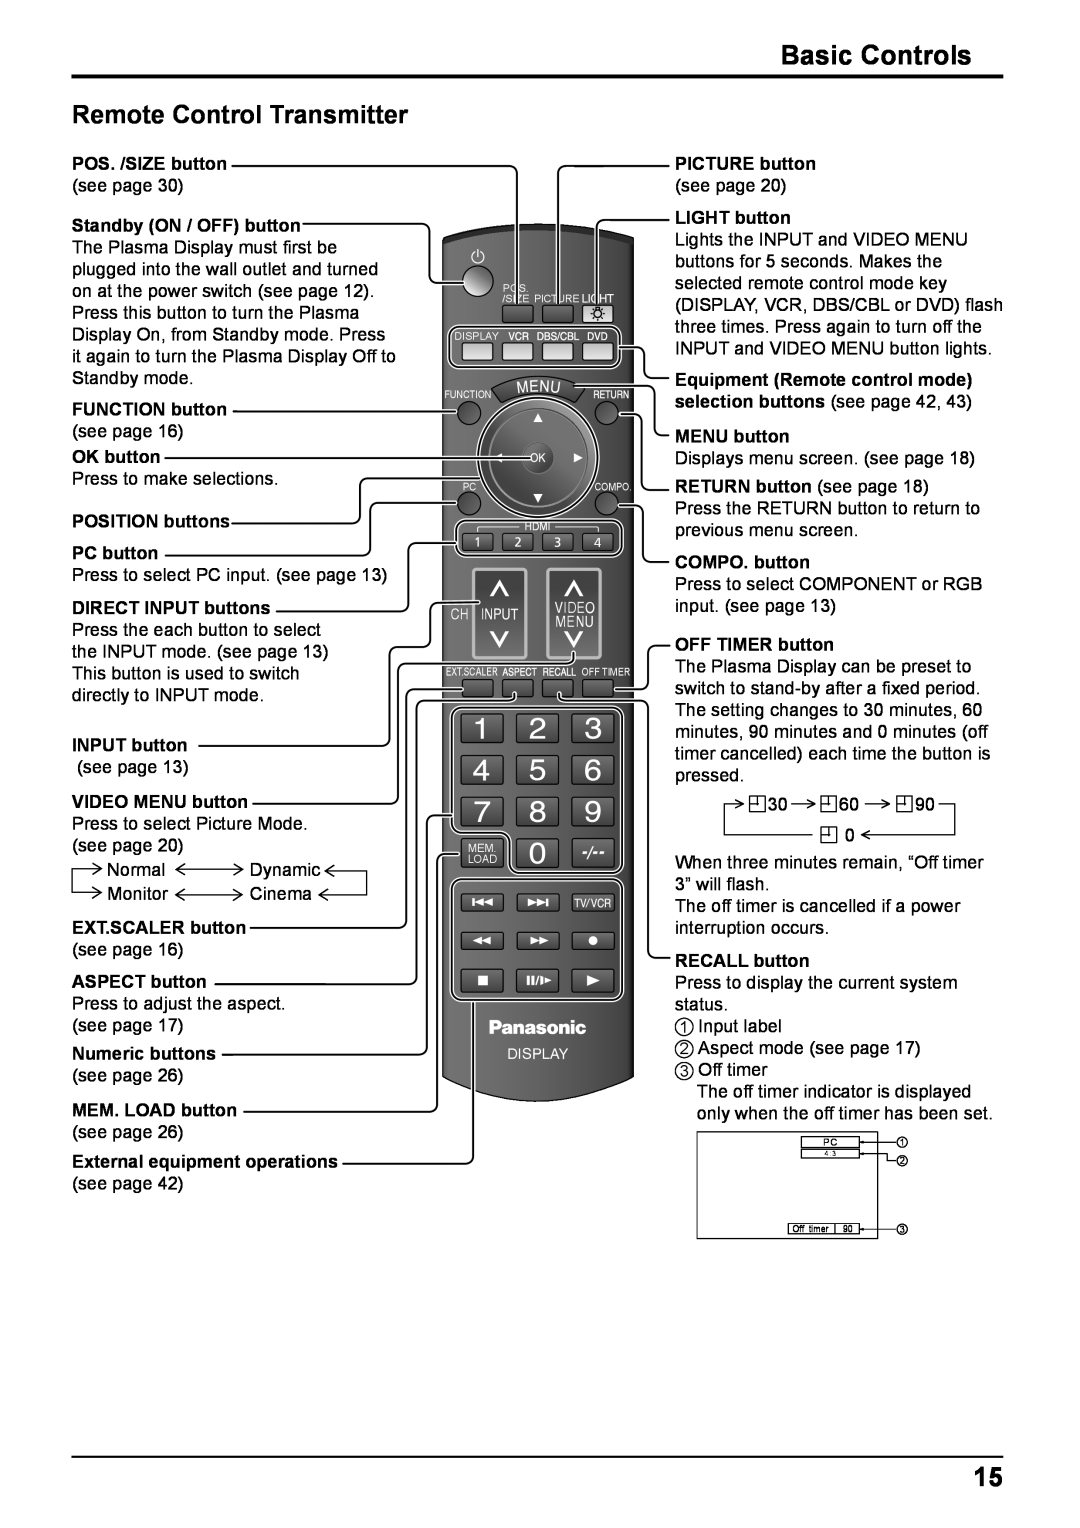 Panasonic TH-50VX100E Basic Controls, Remote Control Transmitter, POS. /SIZE button, FUNCTION button, OK button 